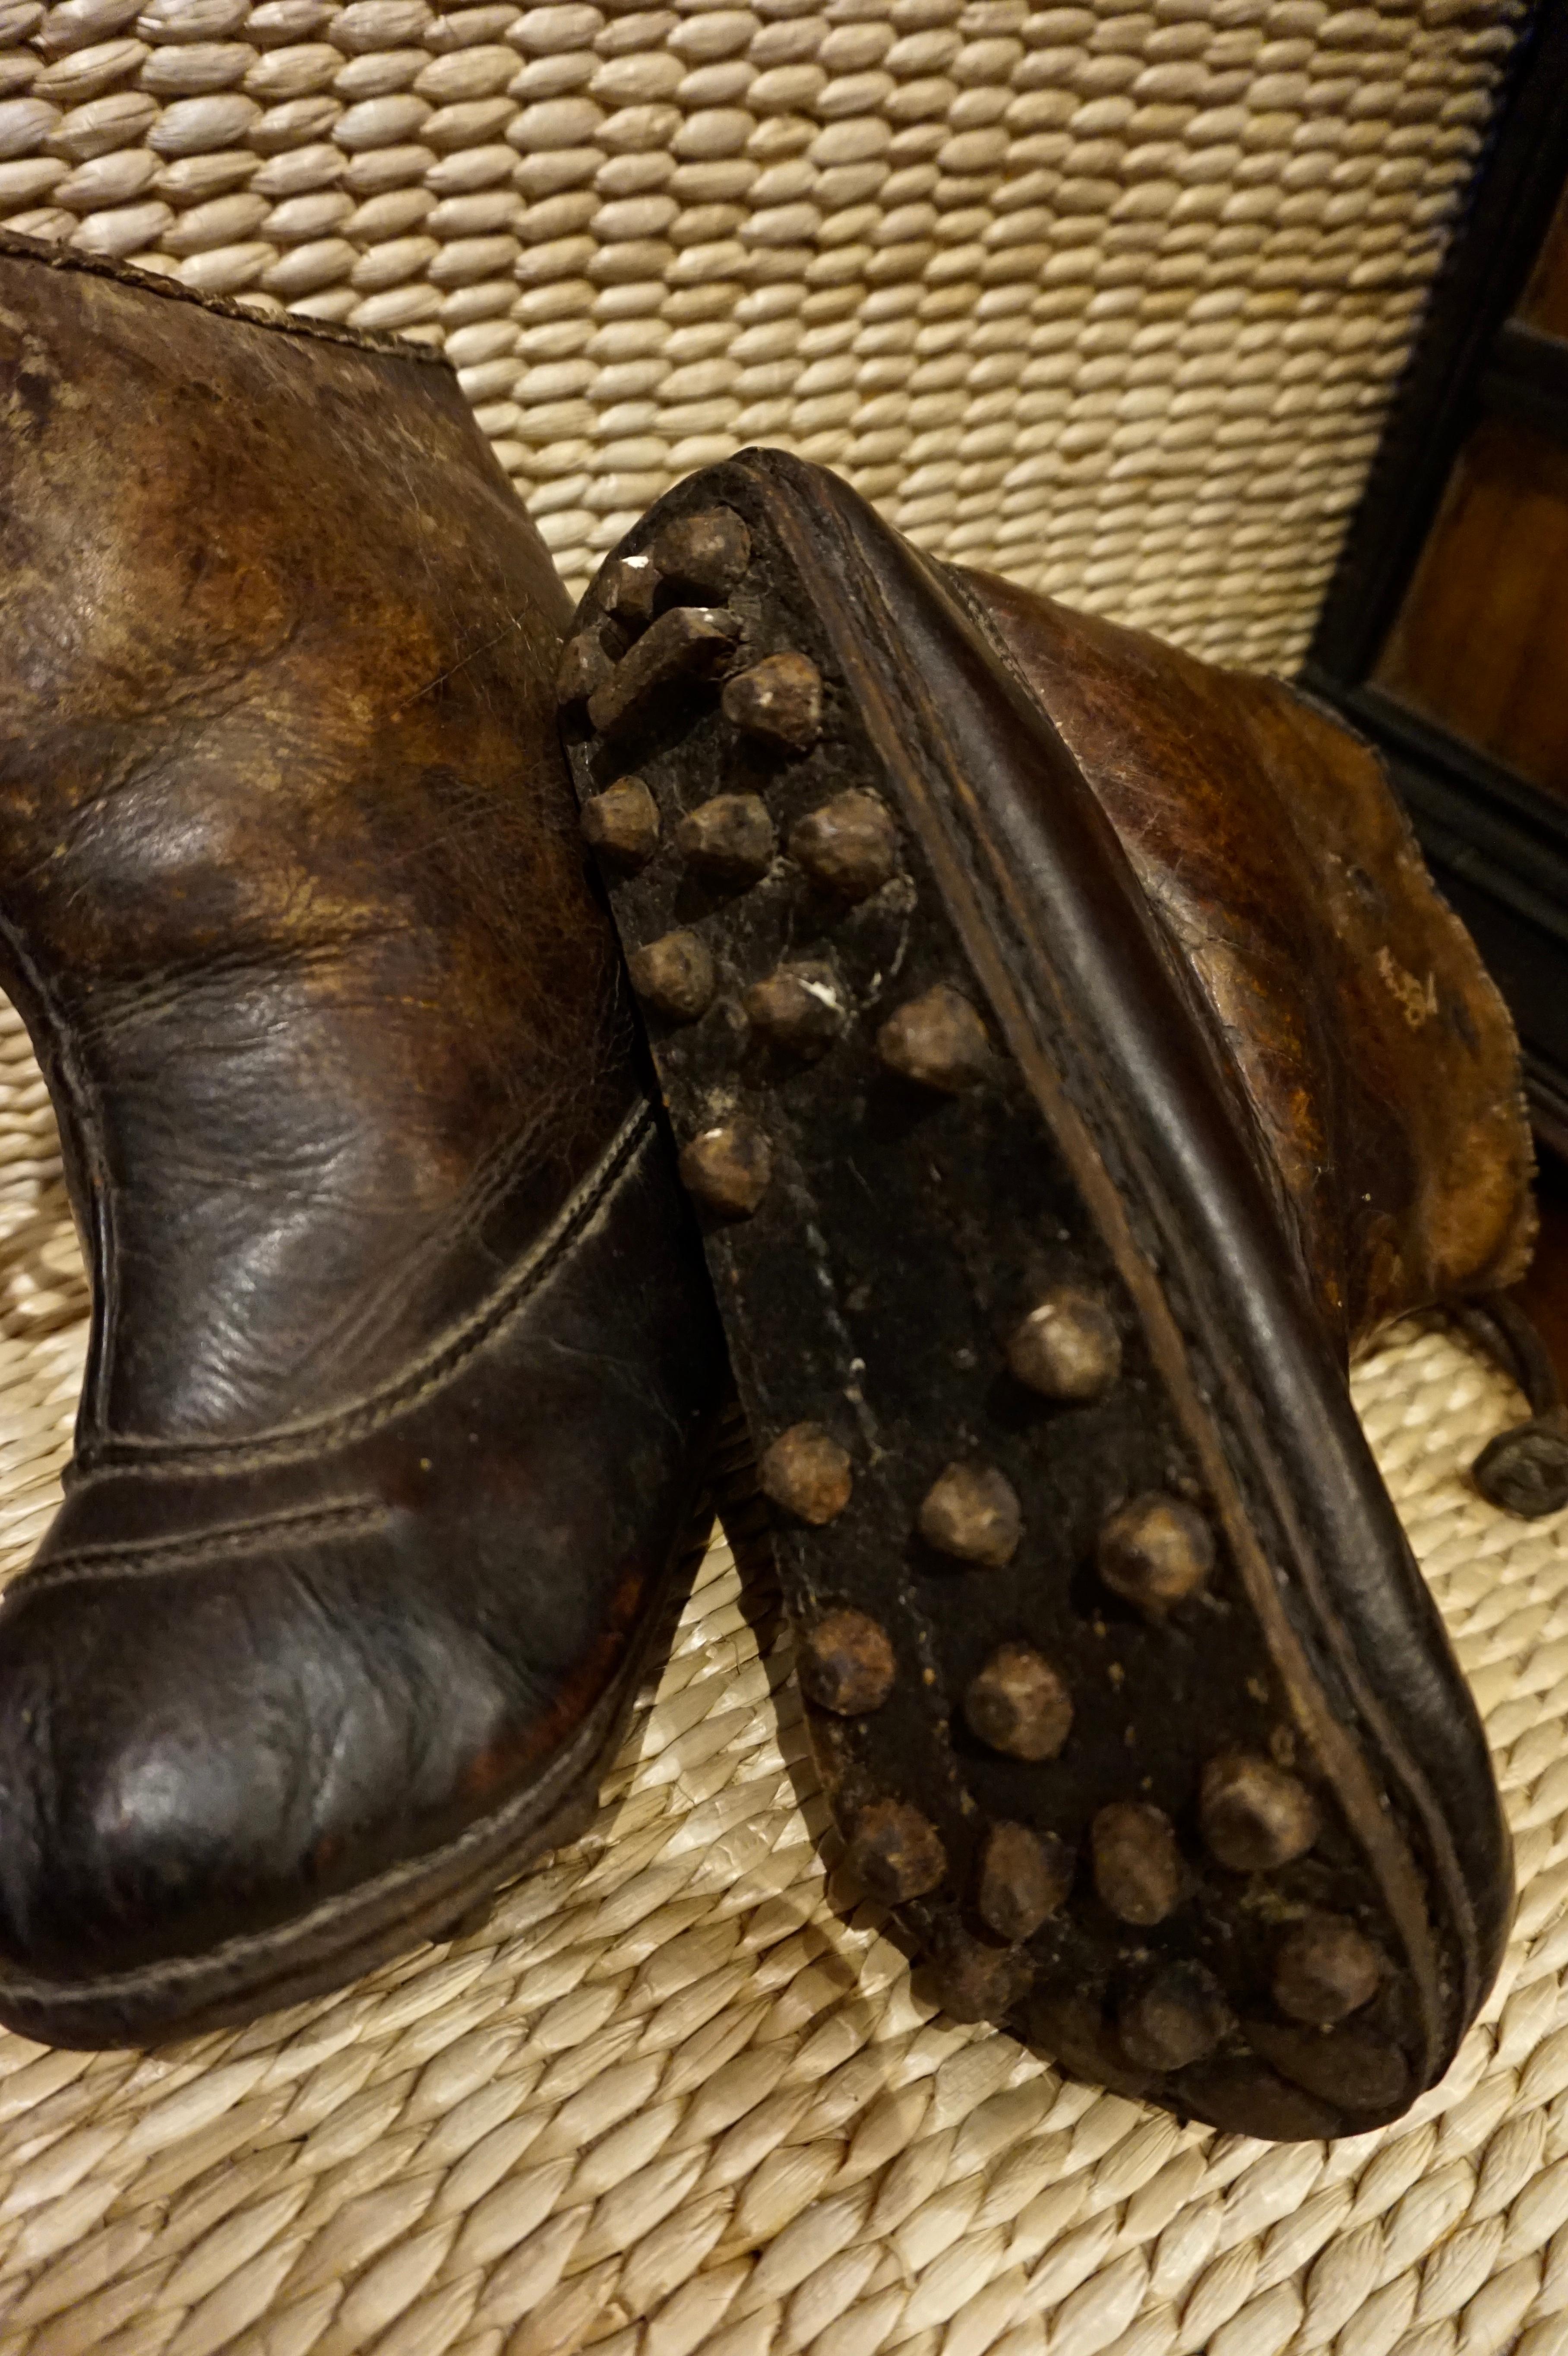 18th century boots